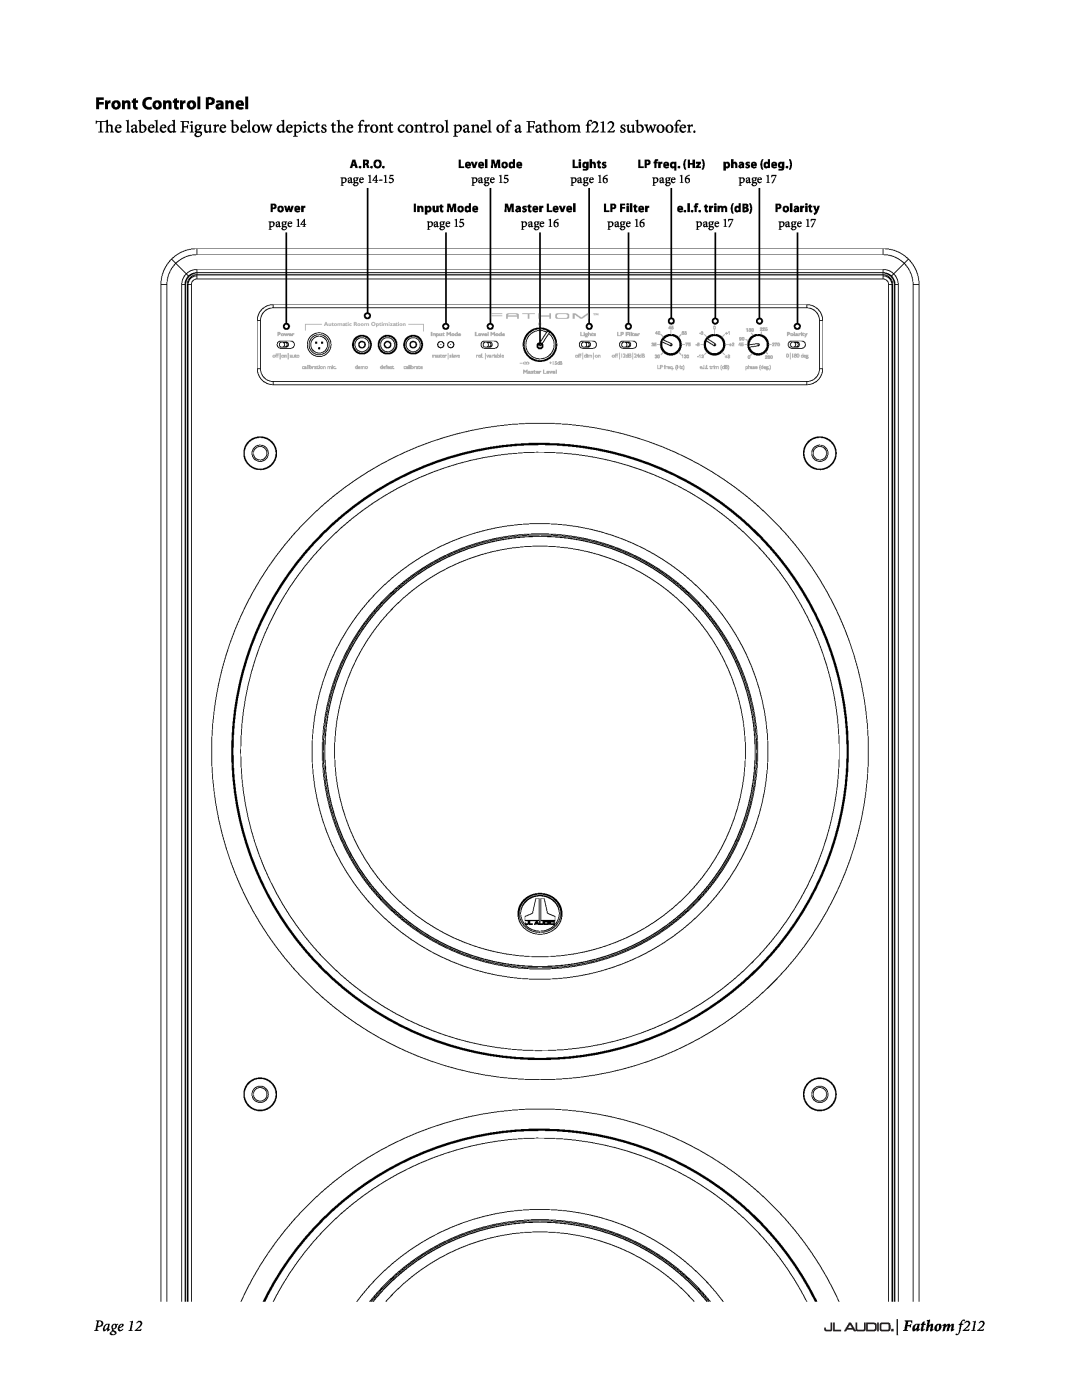 JL Audio Front Control Panel, Page, Fathom f212, Lights, page, Power, Input Mode, LP Filter, e.l.f. trim dB, Polarity 